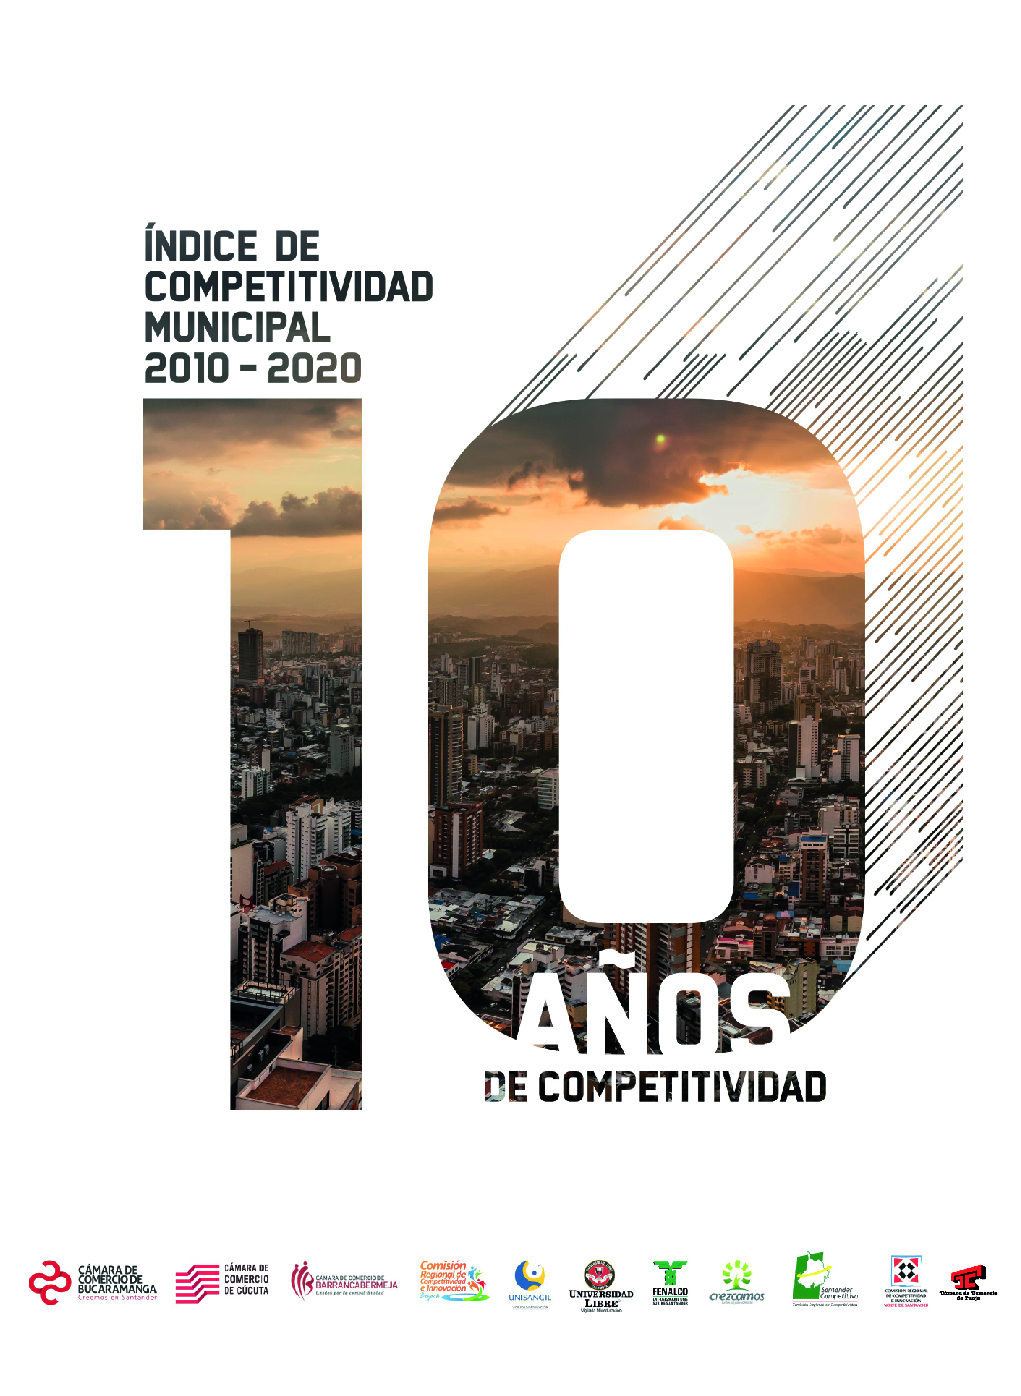 Ã�ndice de Competitividad Municipal (ICM) 2020